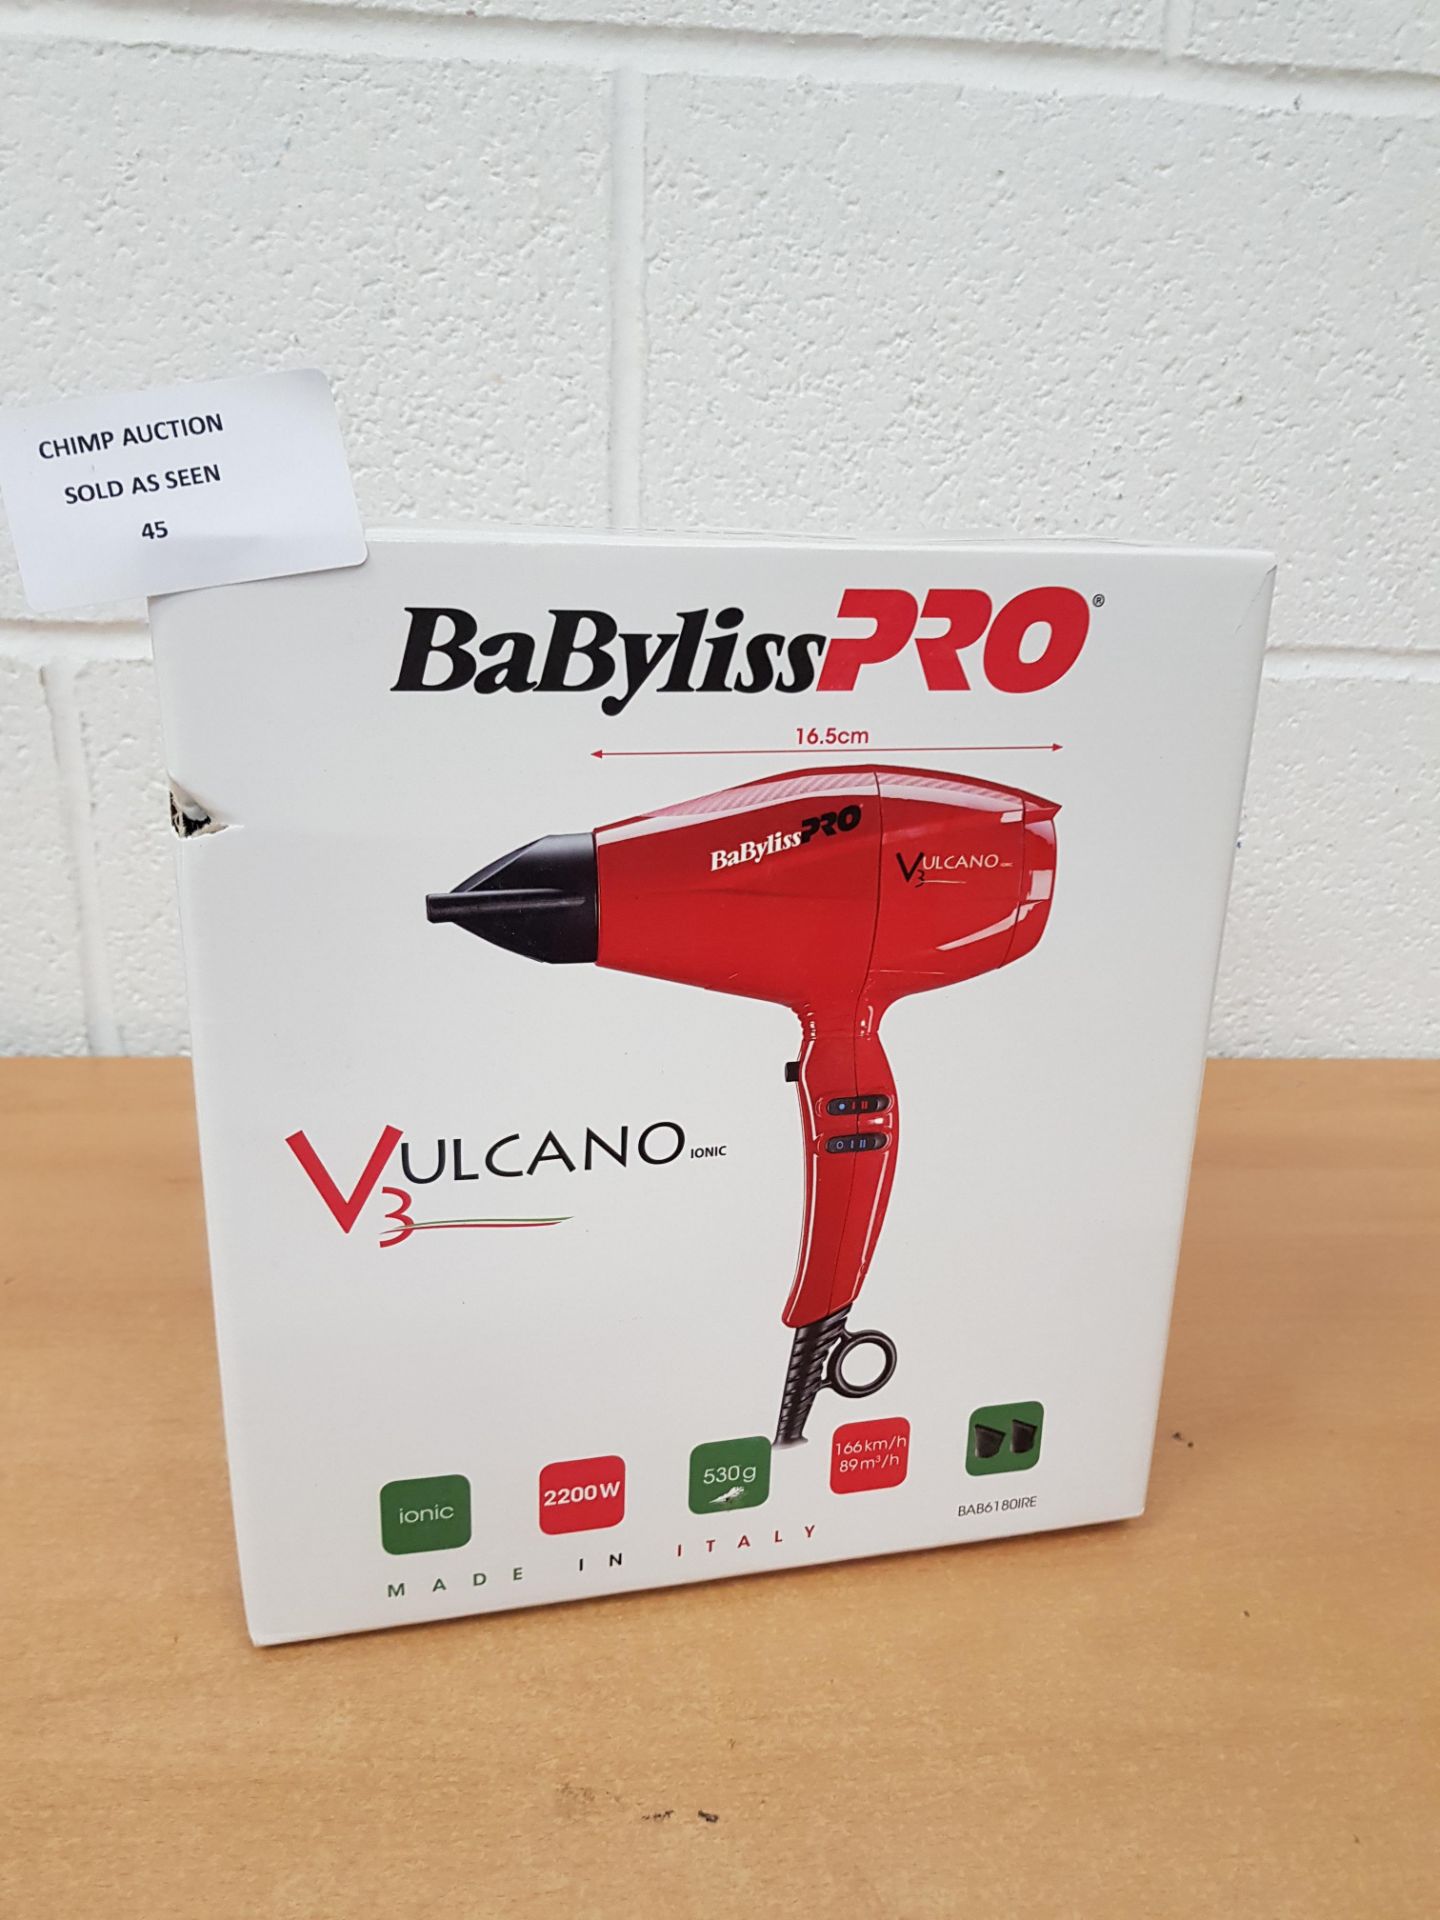 Babyliss Pro Vulcano 3 Ionic Hair Dryer RRP £109.99